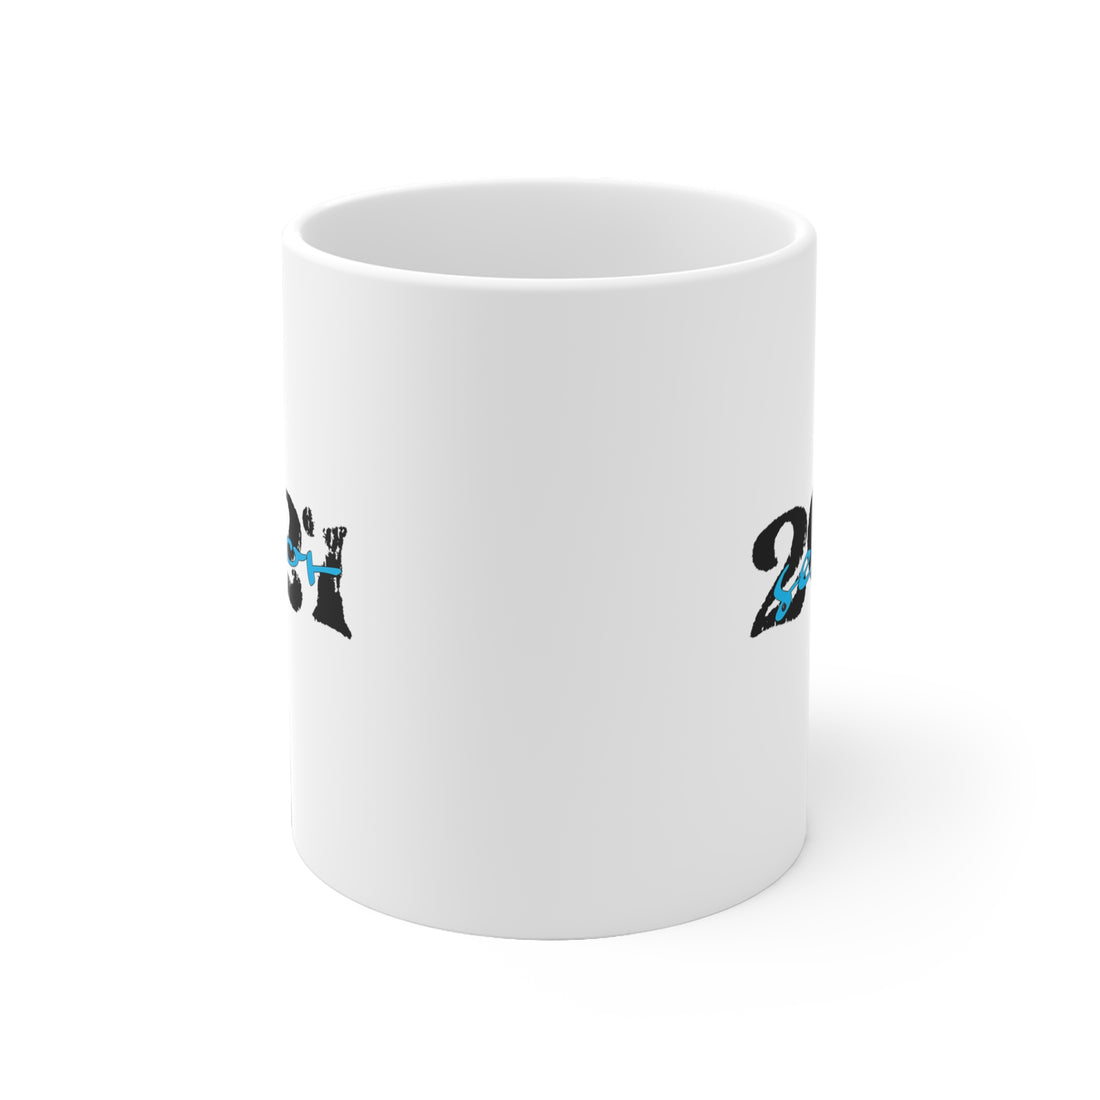 Senior With Class Year Customizable - White Ceramic Mug 2 sizes Available